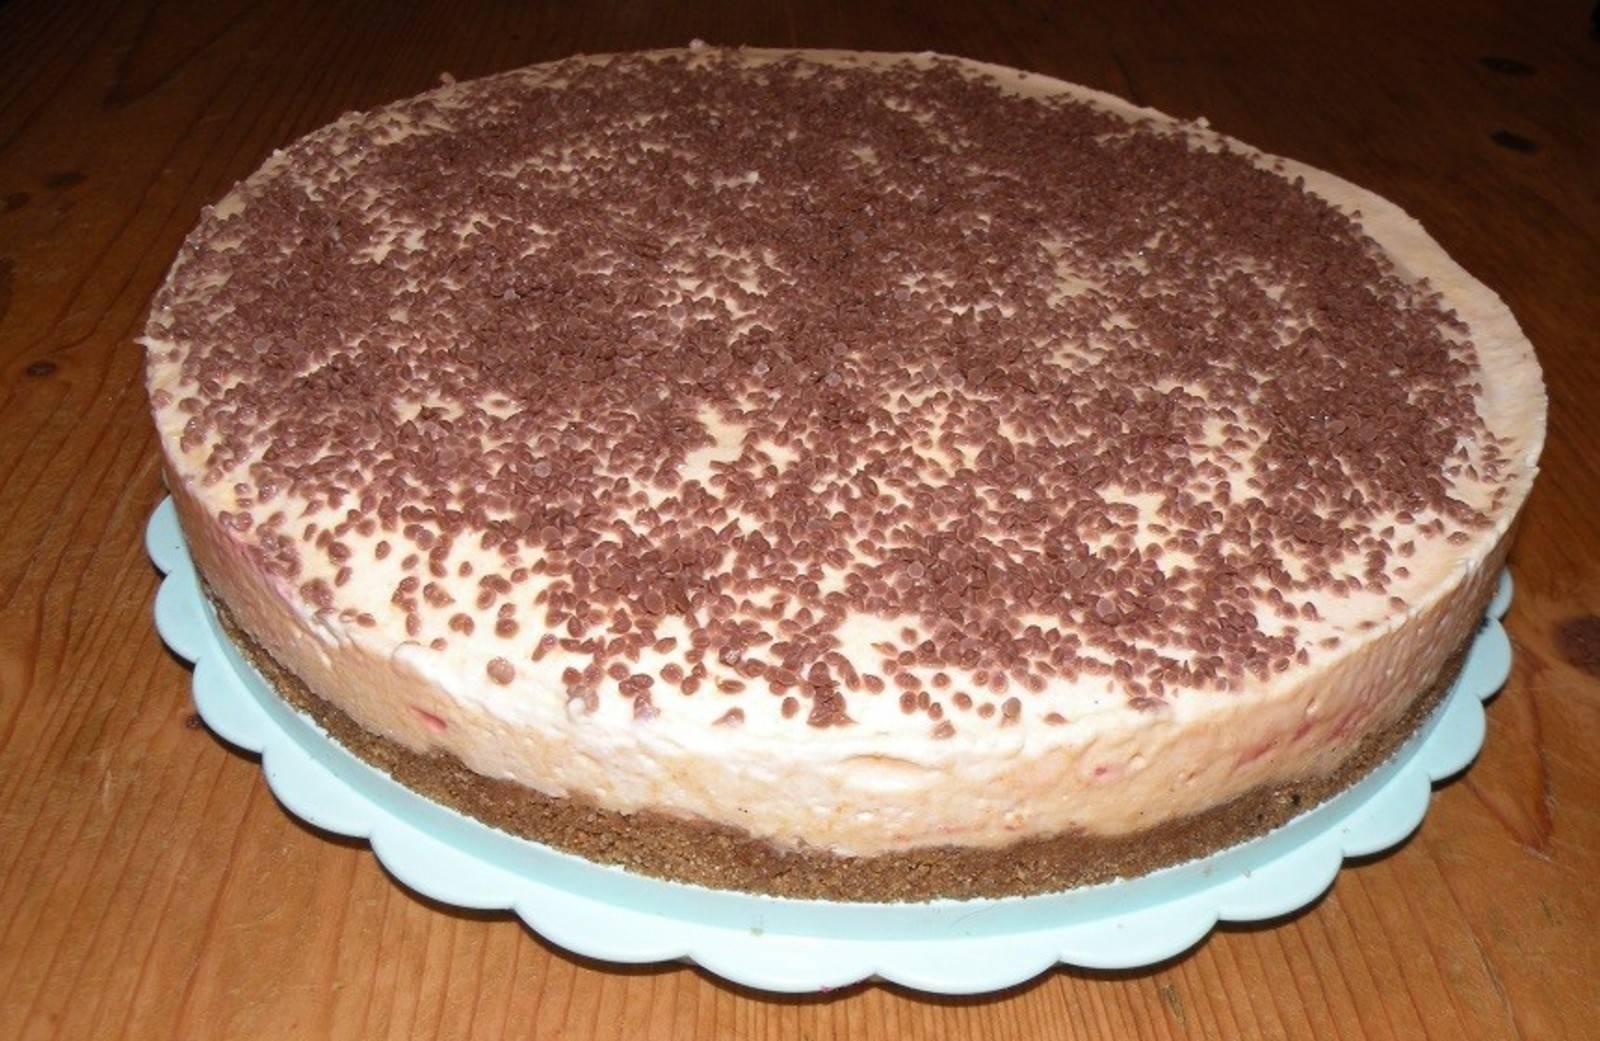 Topfen-Schoko-Torte